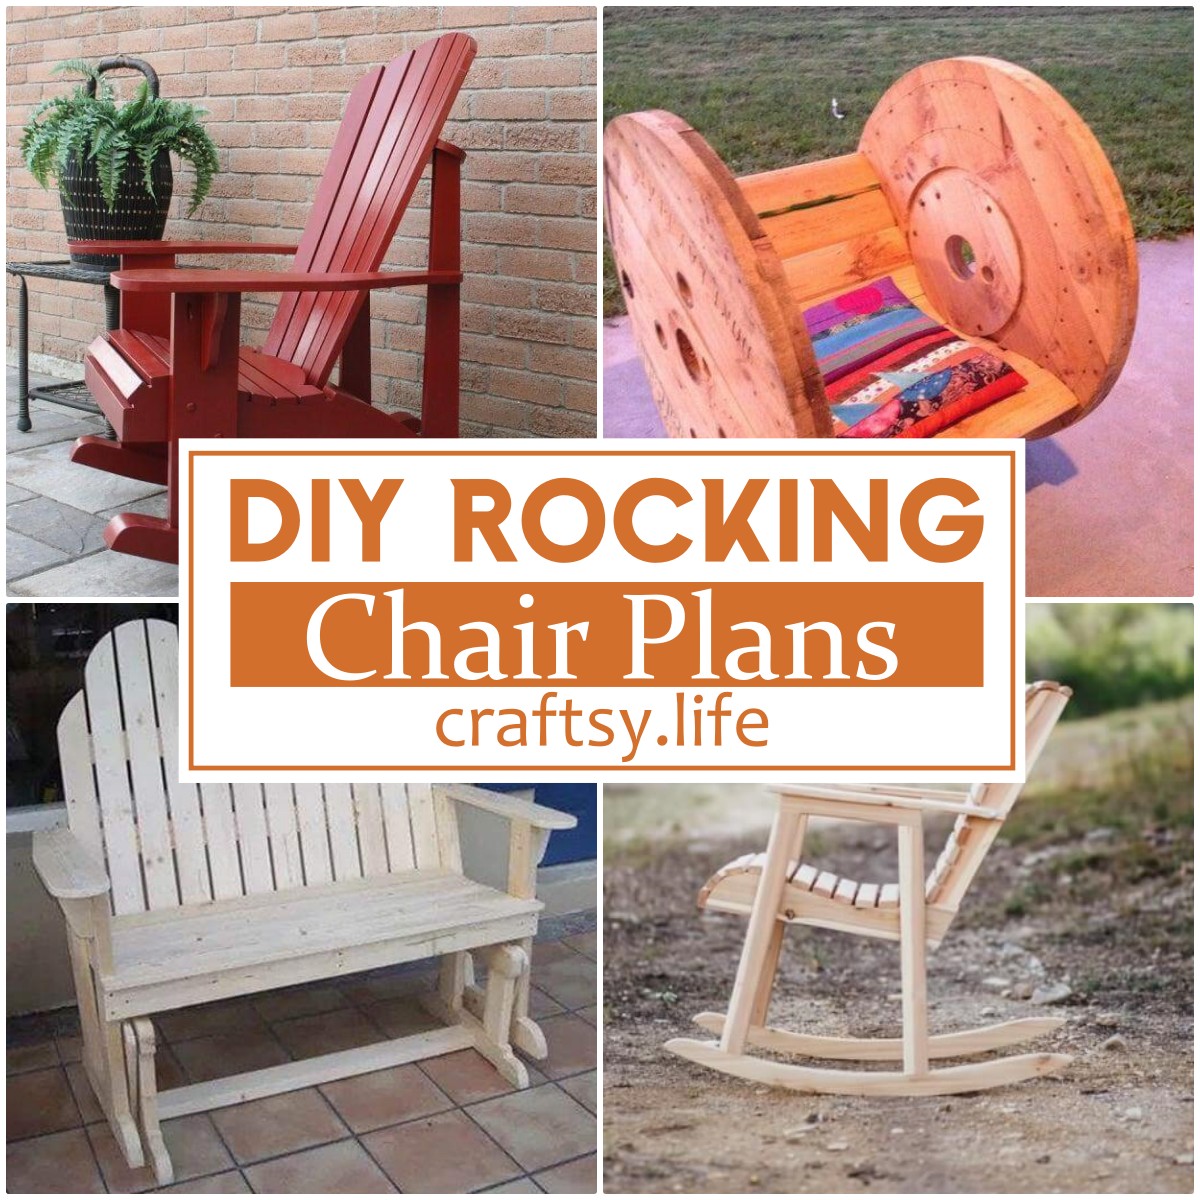 DIY Rocking Chair Plans